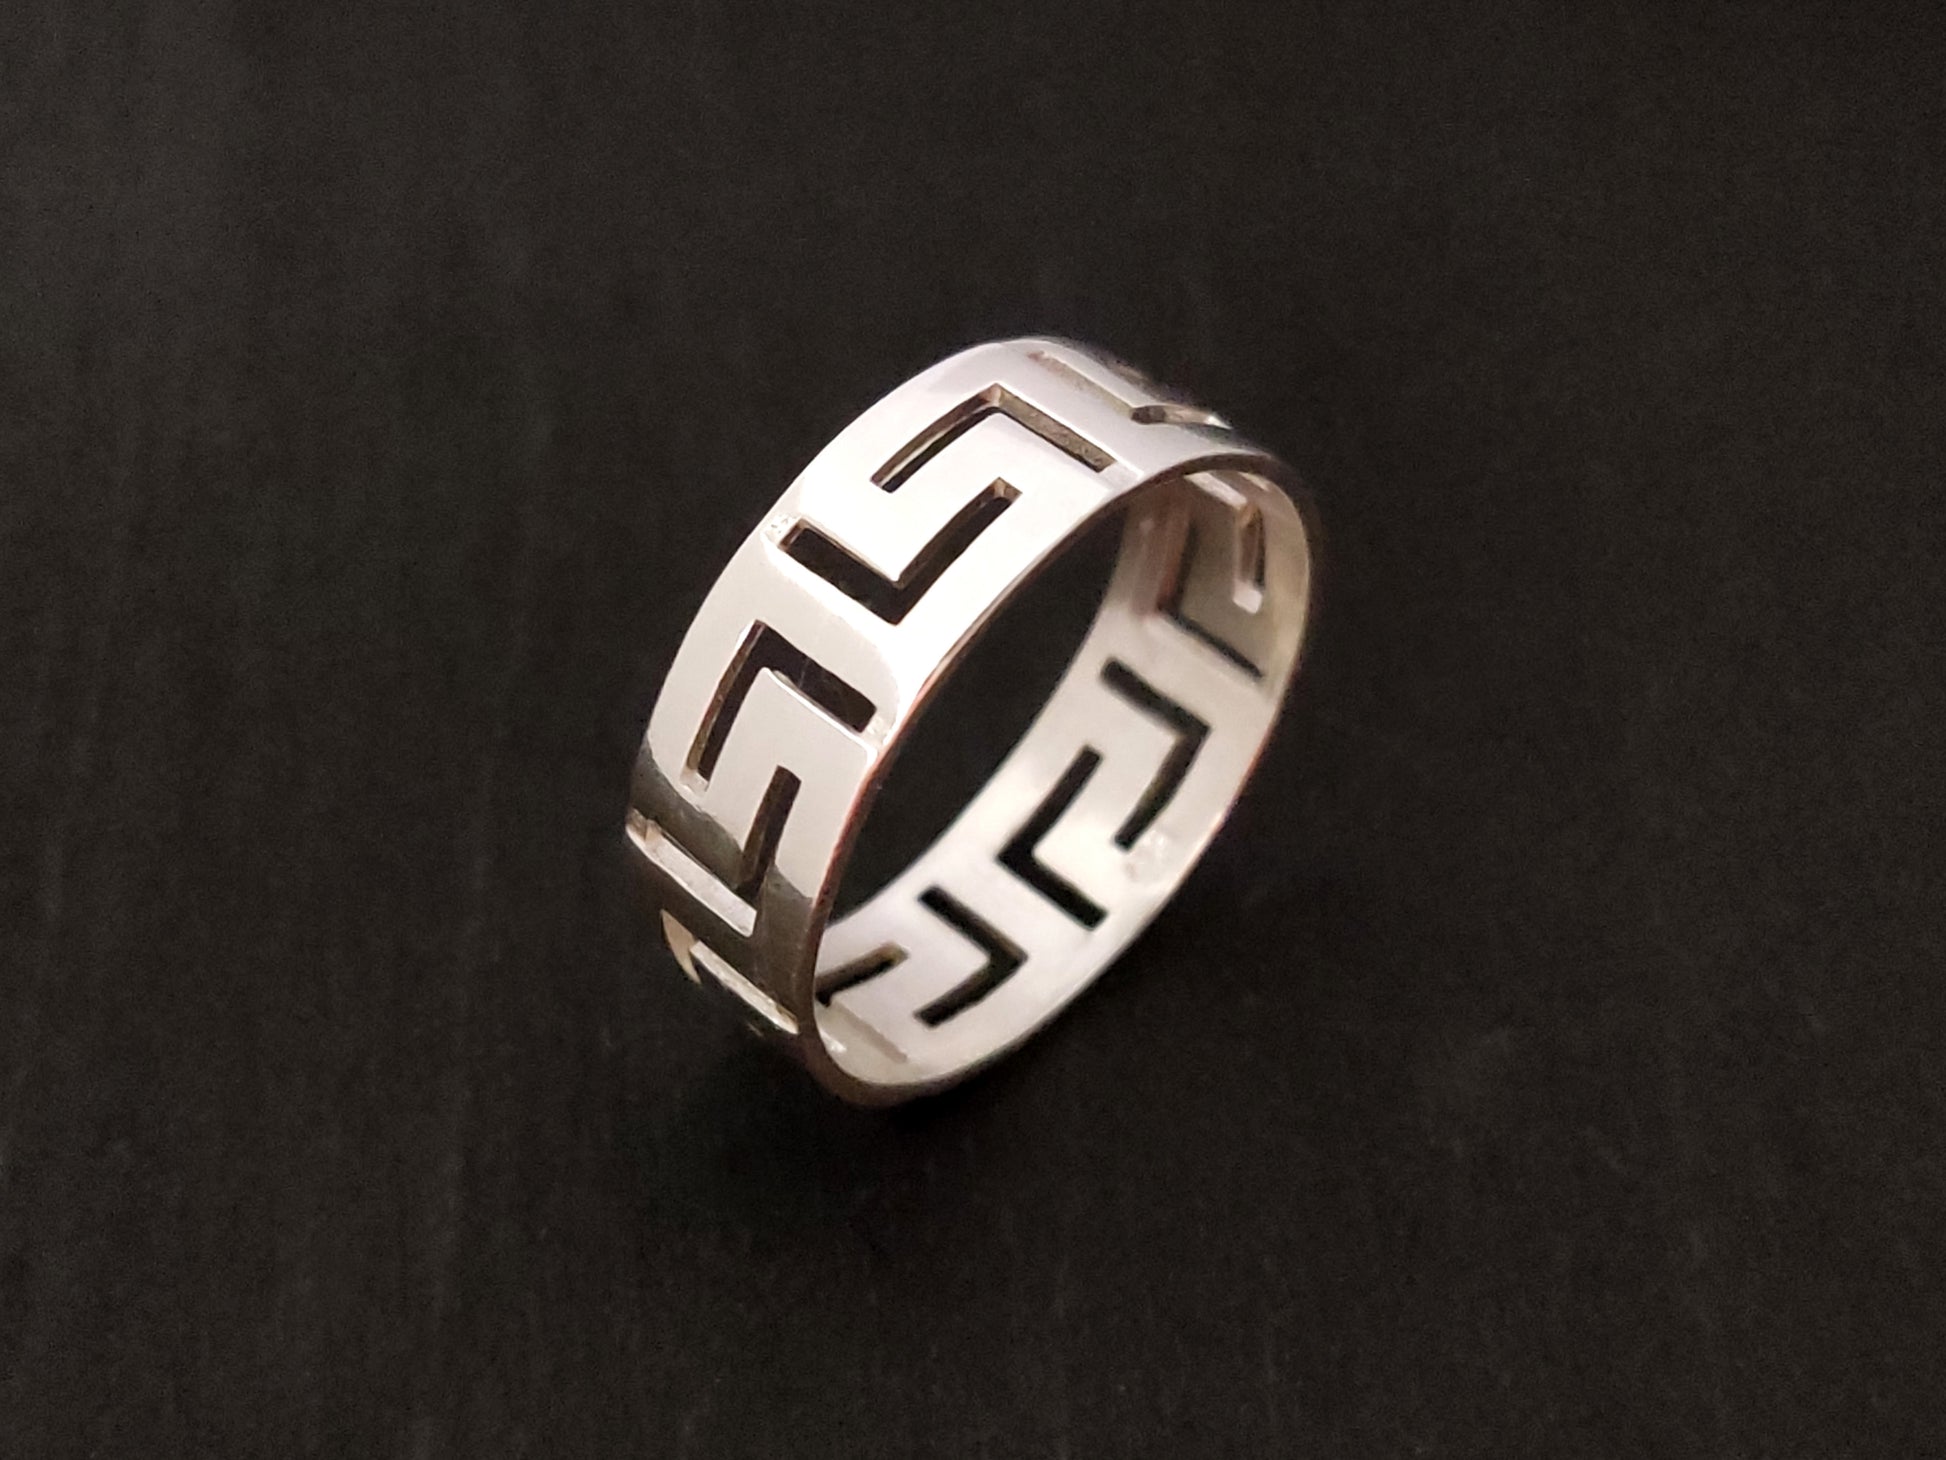 Greek Key silver ring on black background.